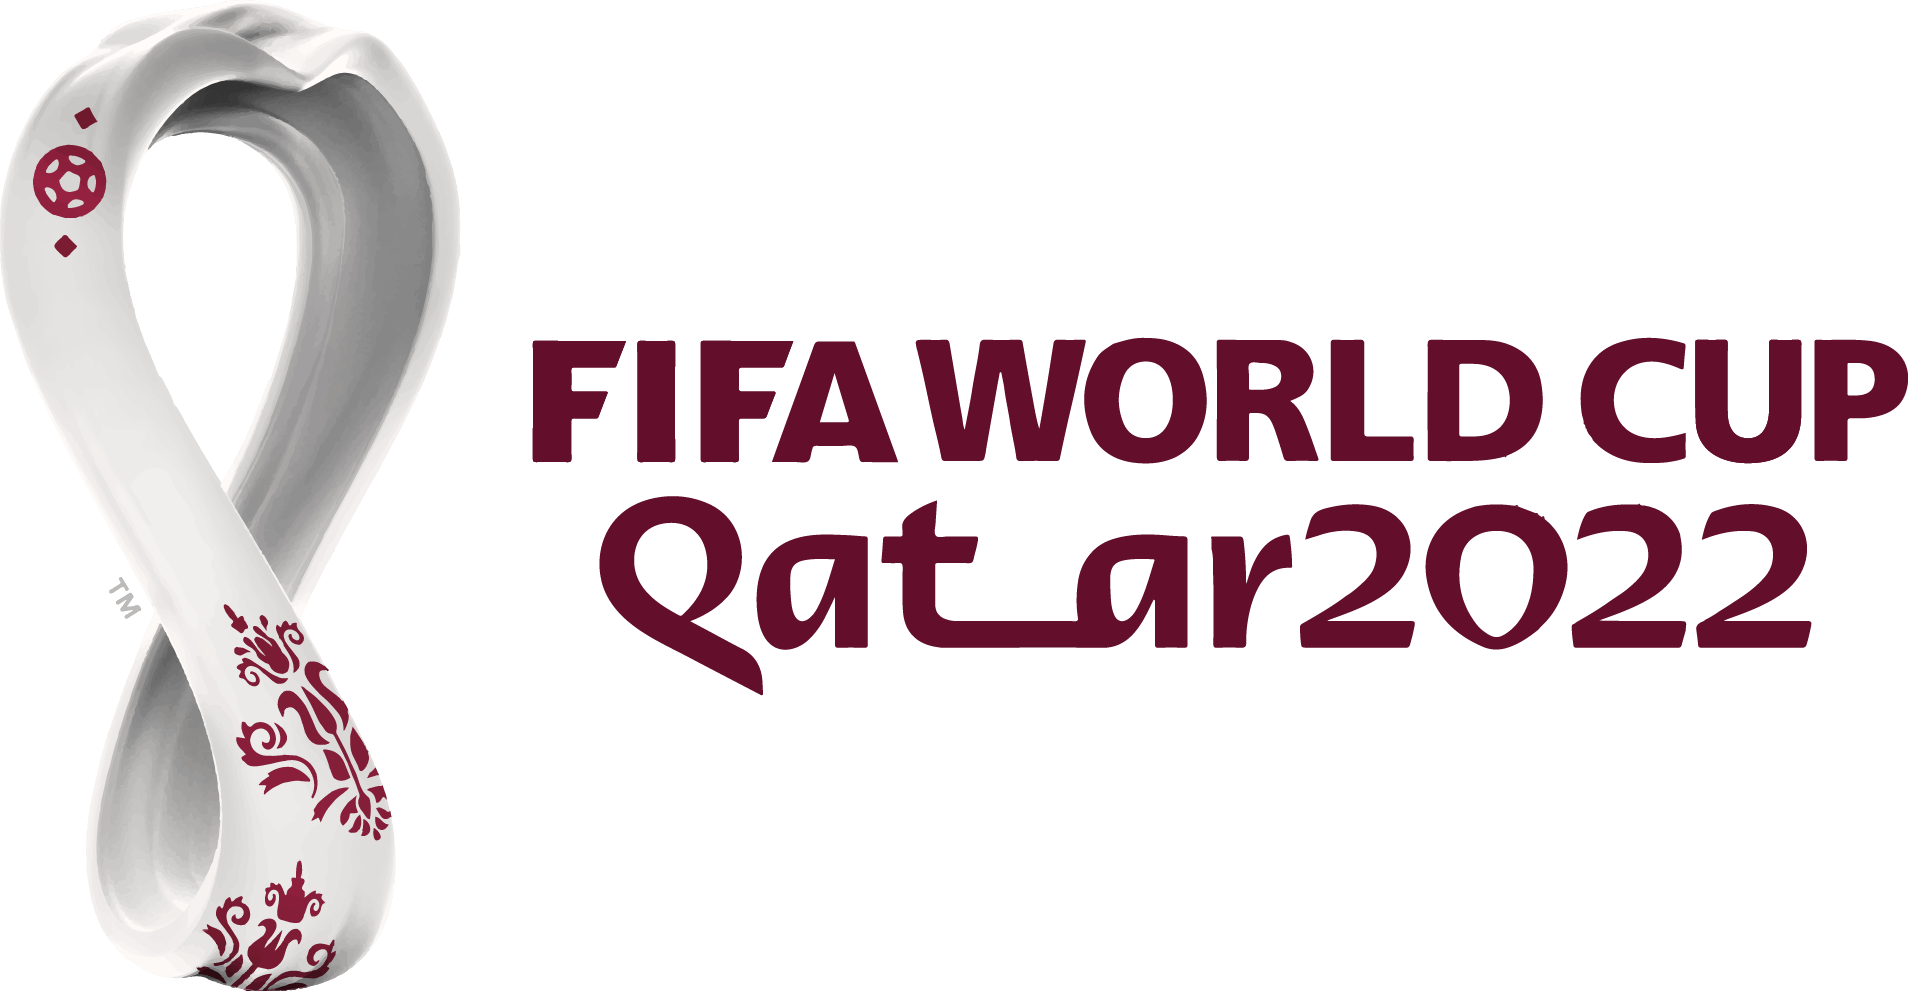 2022 fIfa world cup qatar transparent logo png 42094